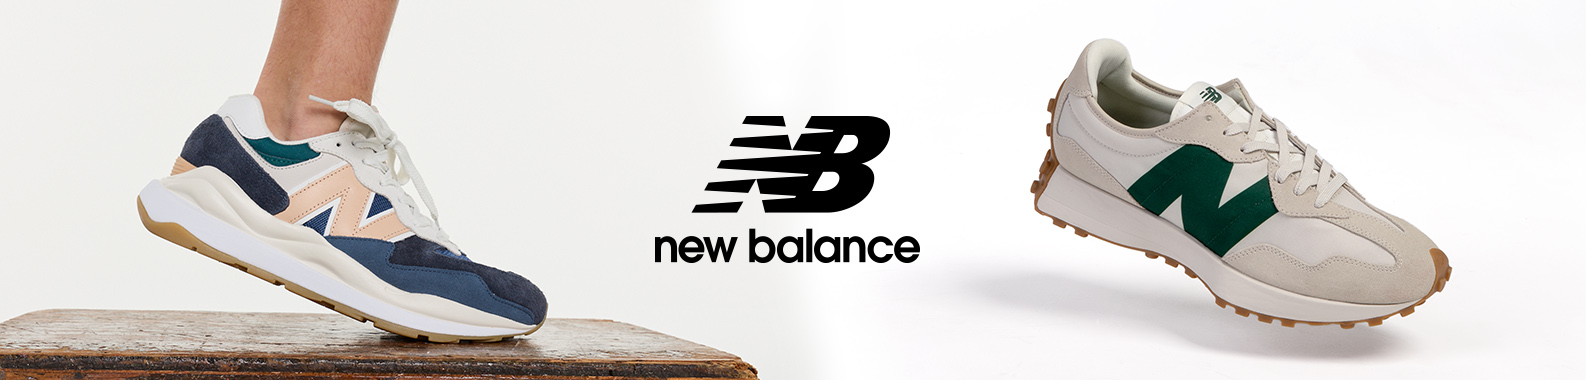 New Balance header image